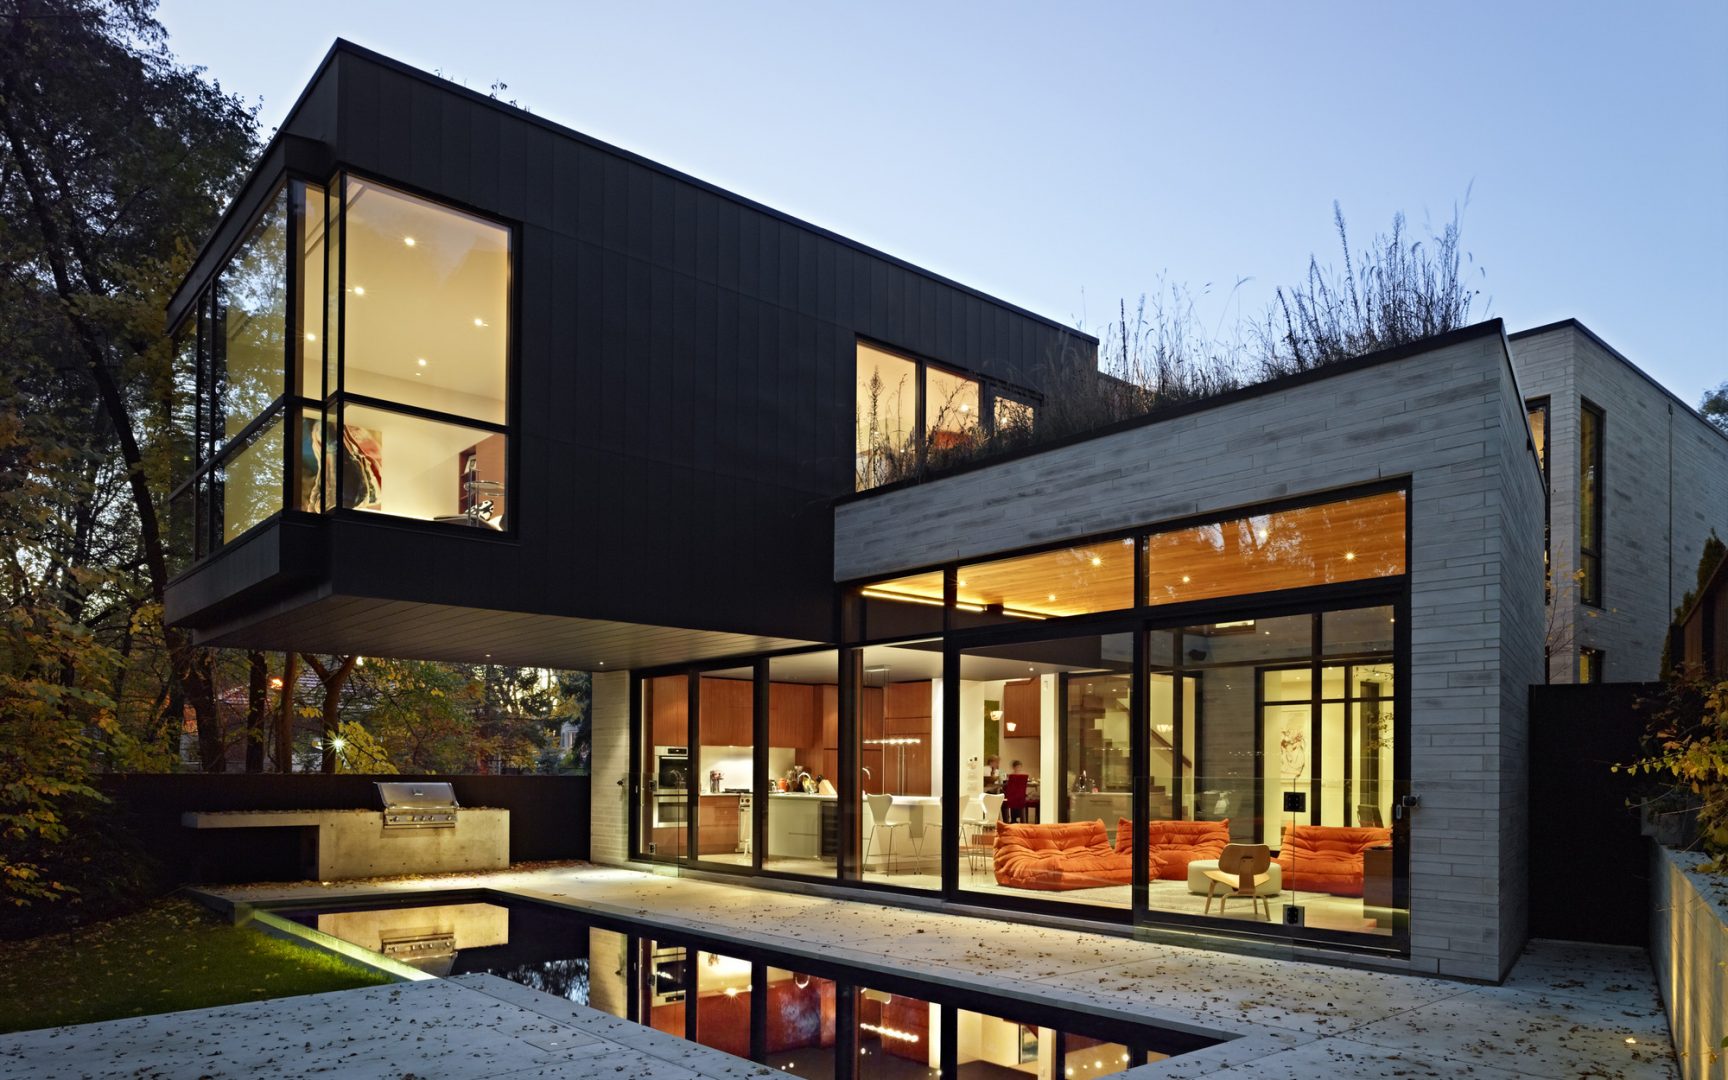 Cedarvale Ravine House, designed by award-winning architect Drew Mandel